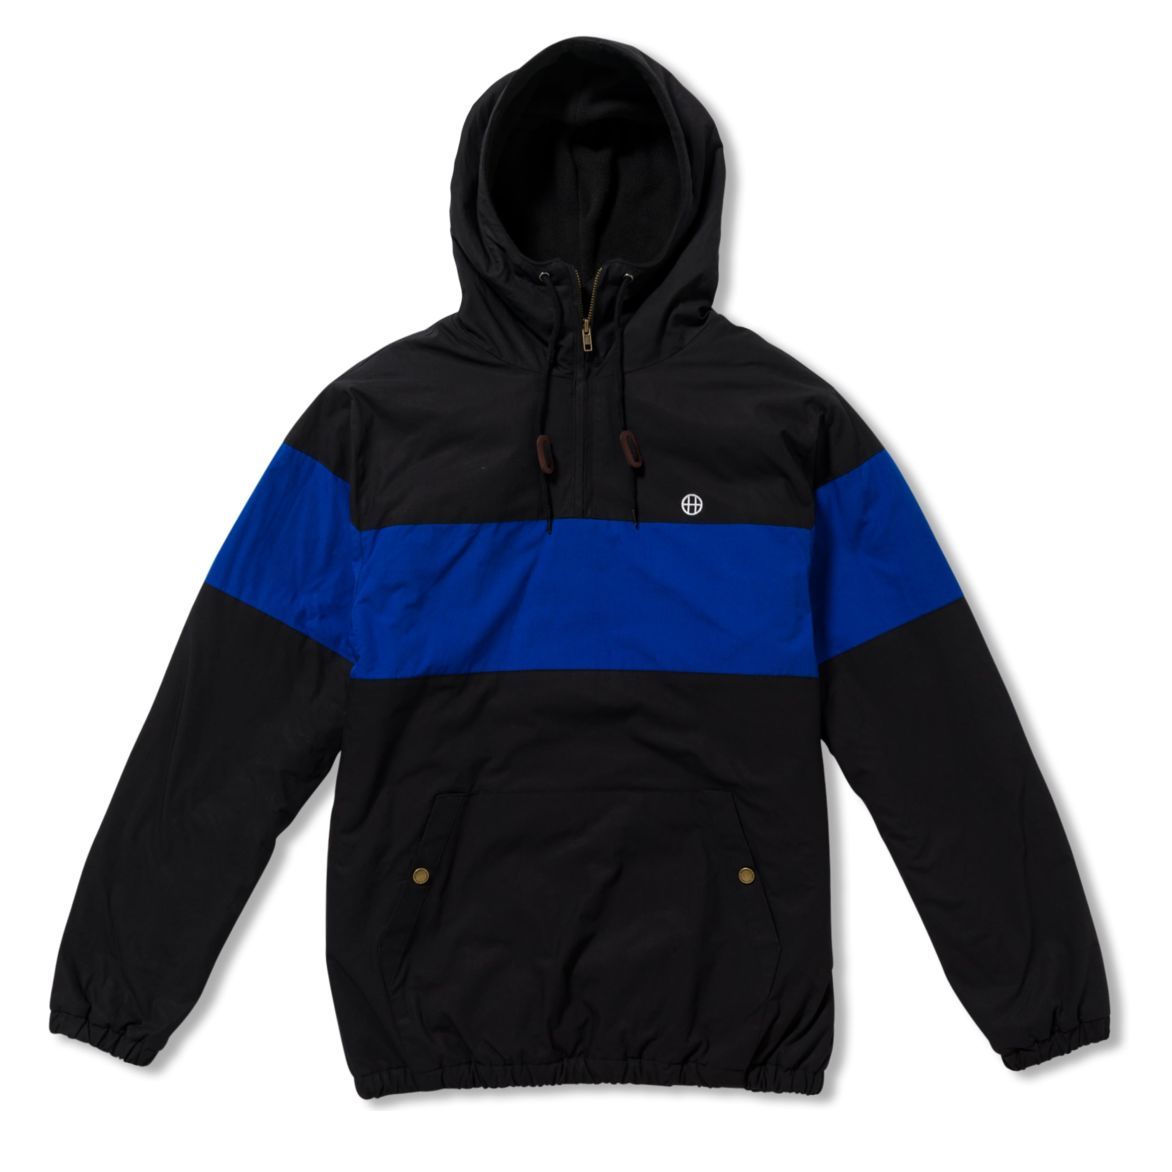 JK00022 huf explorer 1 anorak jacket black